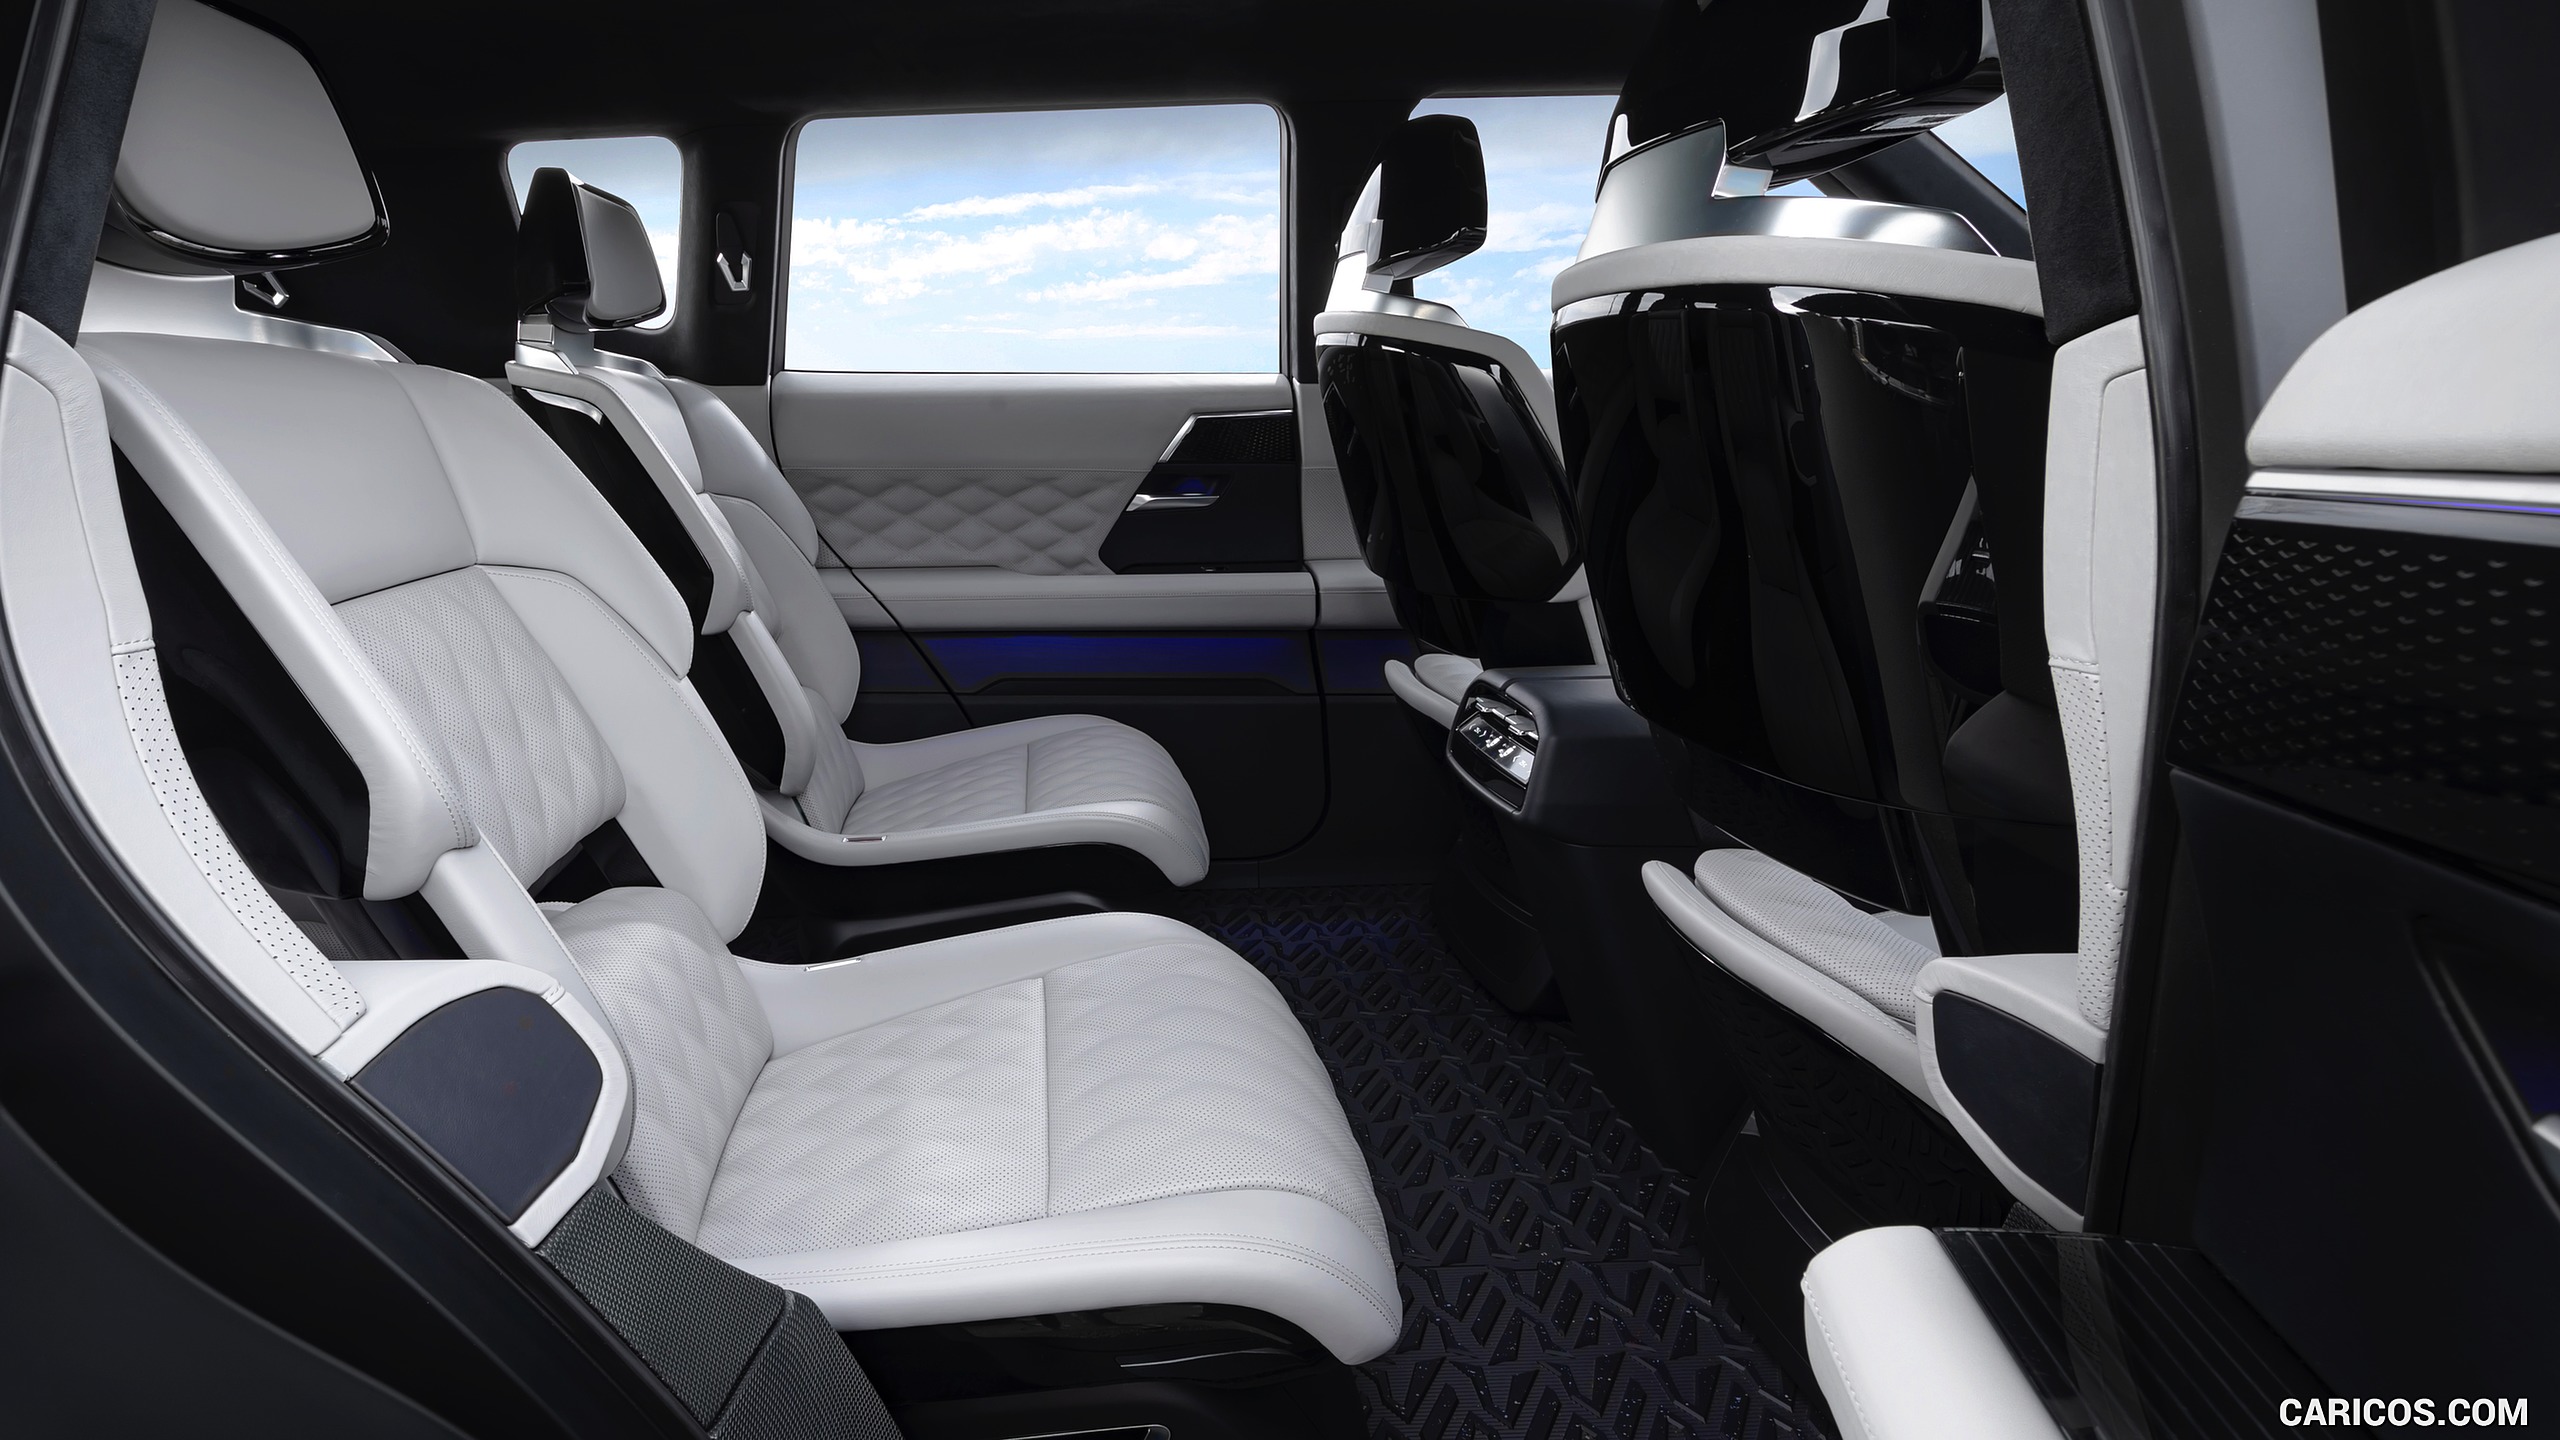 2019 Mitsubishi Engelberg Tourer Concept - Interior, Rear Seats, #19 of 23